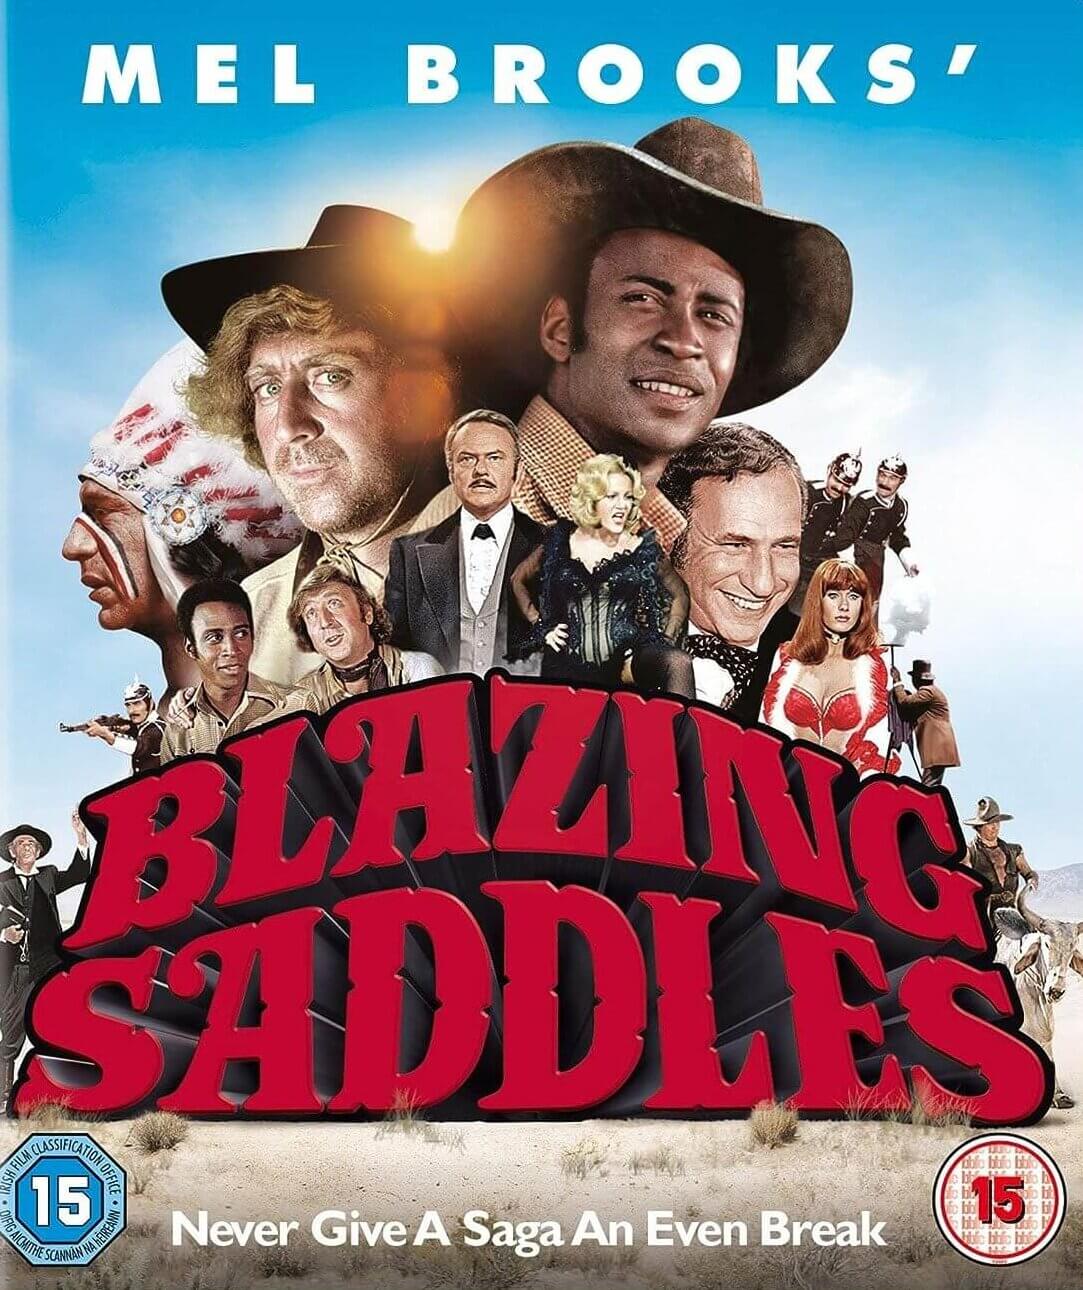 "Blazing Saddles" (1974)